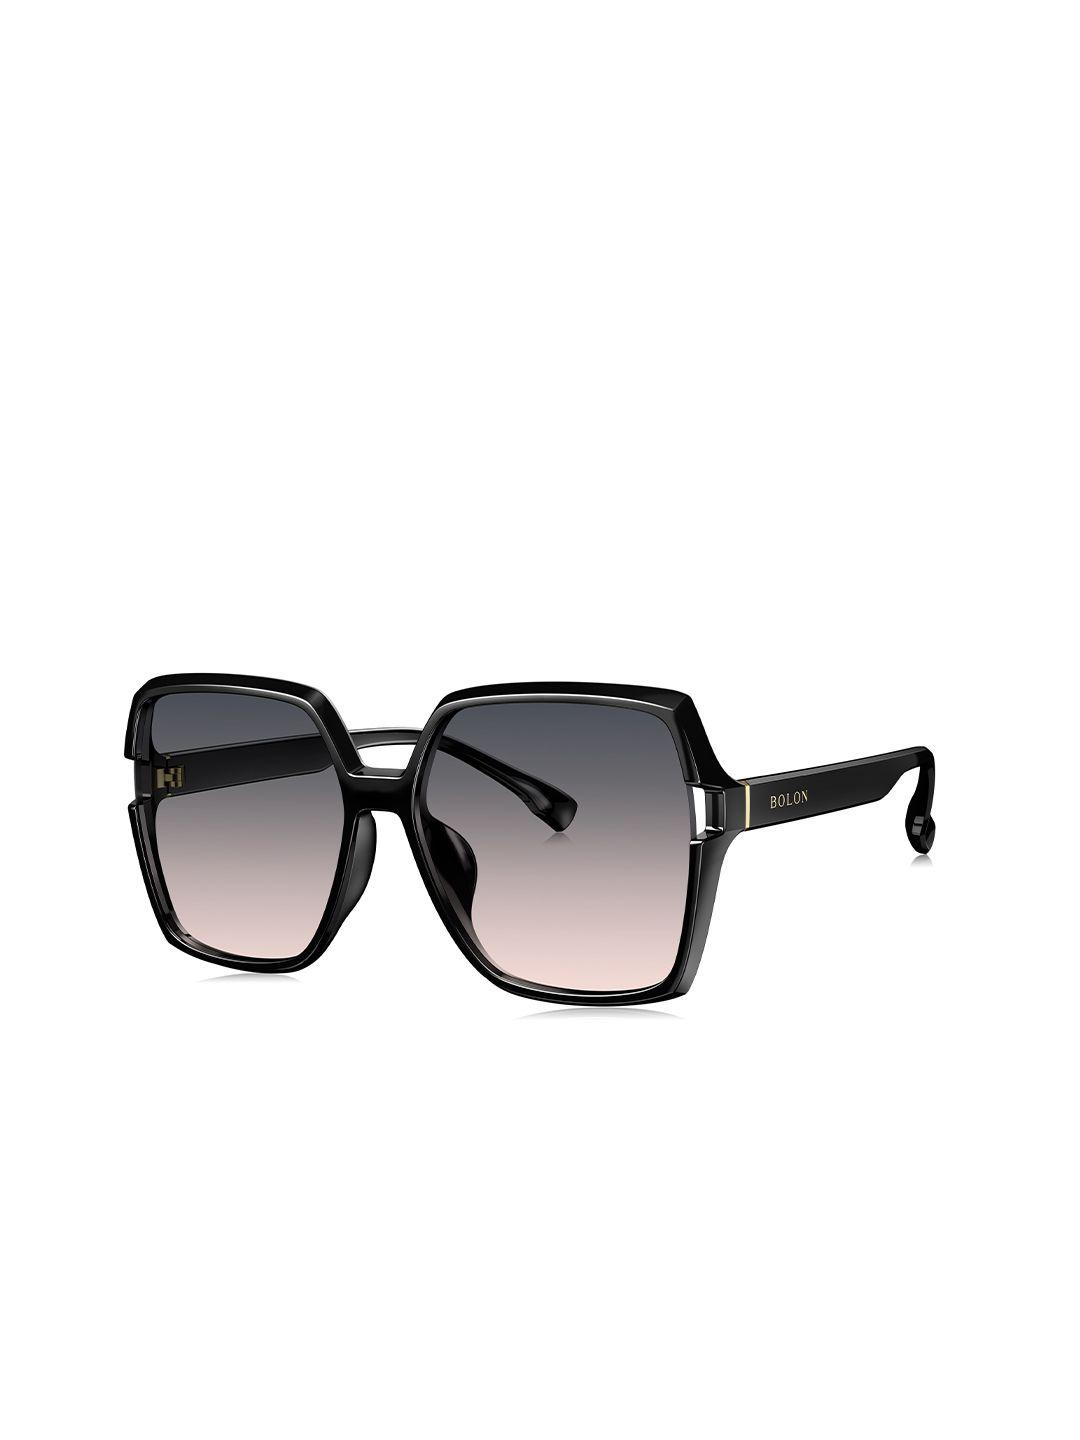 bolon eyewear women grey lens & black other sunglasses with uv protected lens-bl 5060